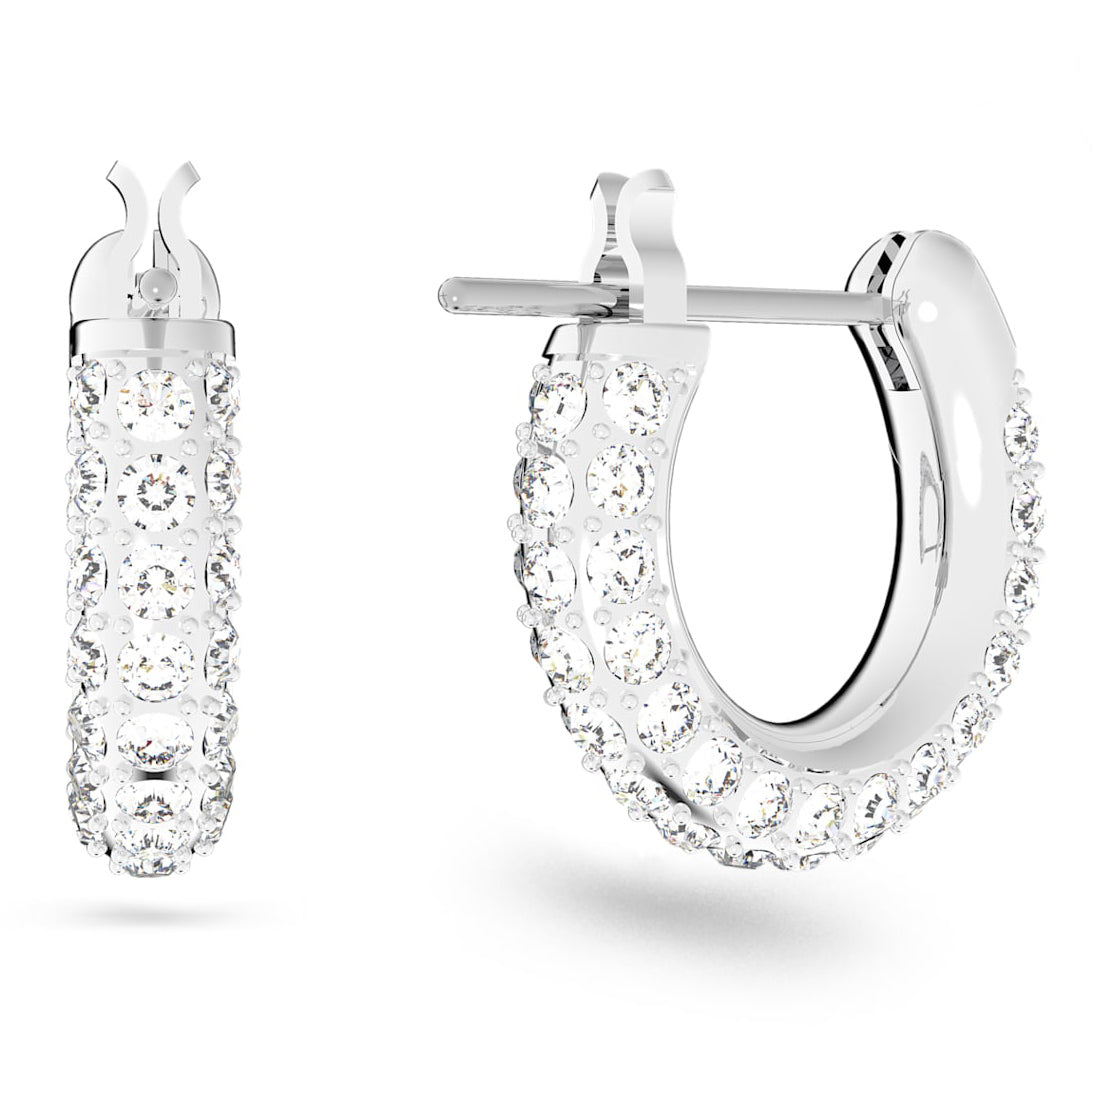 Bông tai mạ Rhodium Swarovski - Women's Earrings White Stone